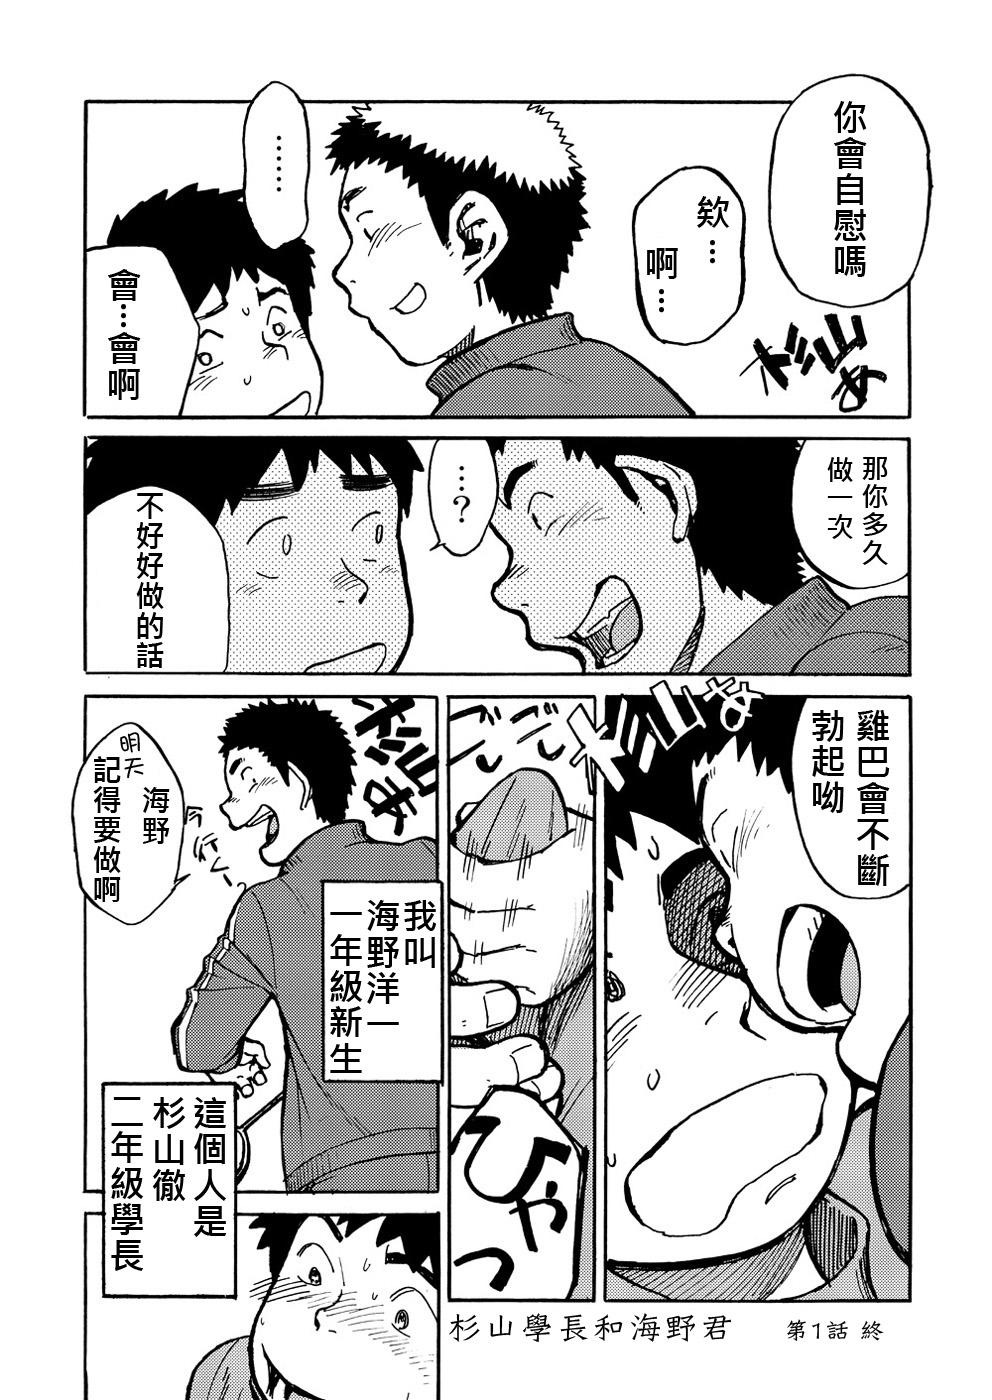 Manga Shounen Zoom Vol. 01 | 漫畫少年特寫 Vol. 01 12